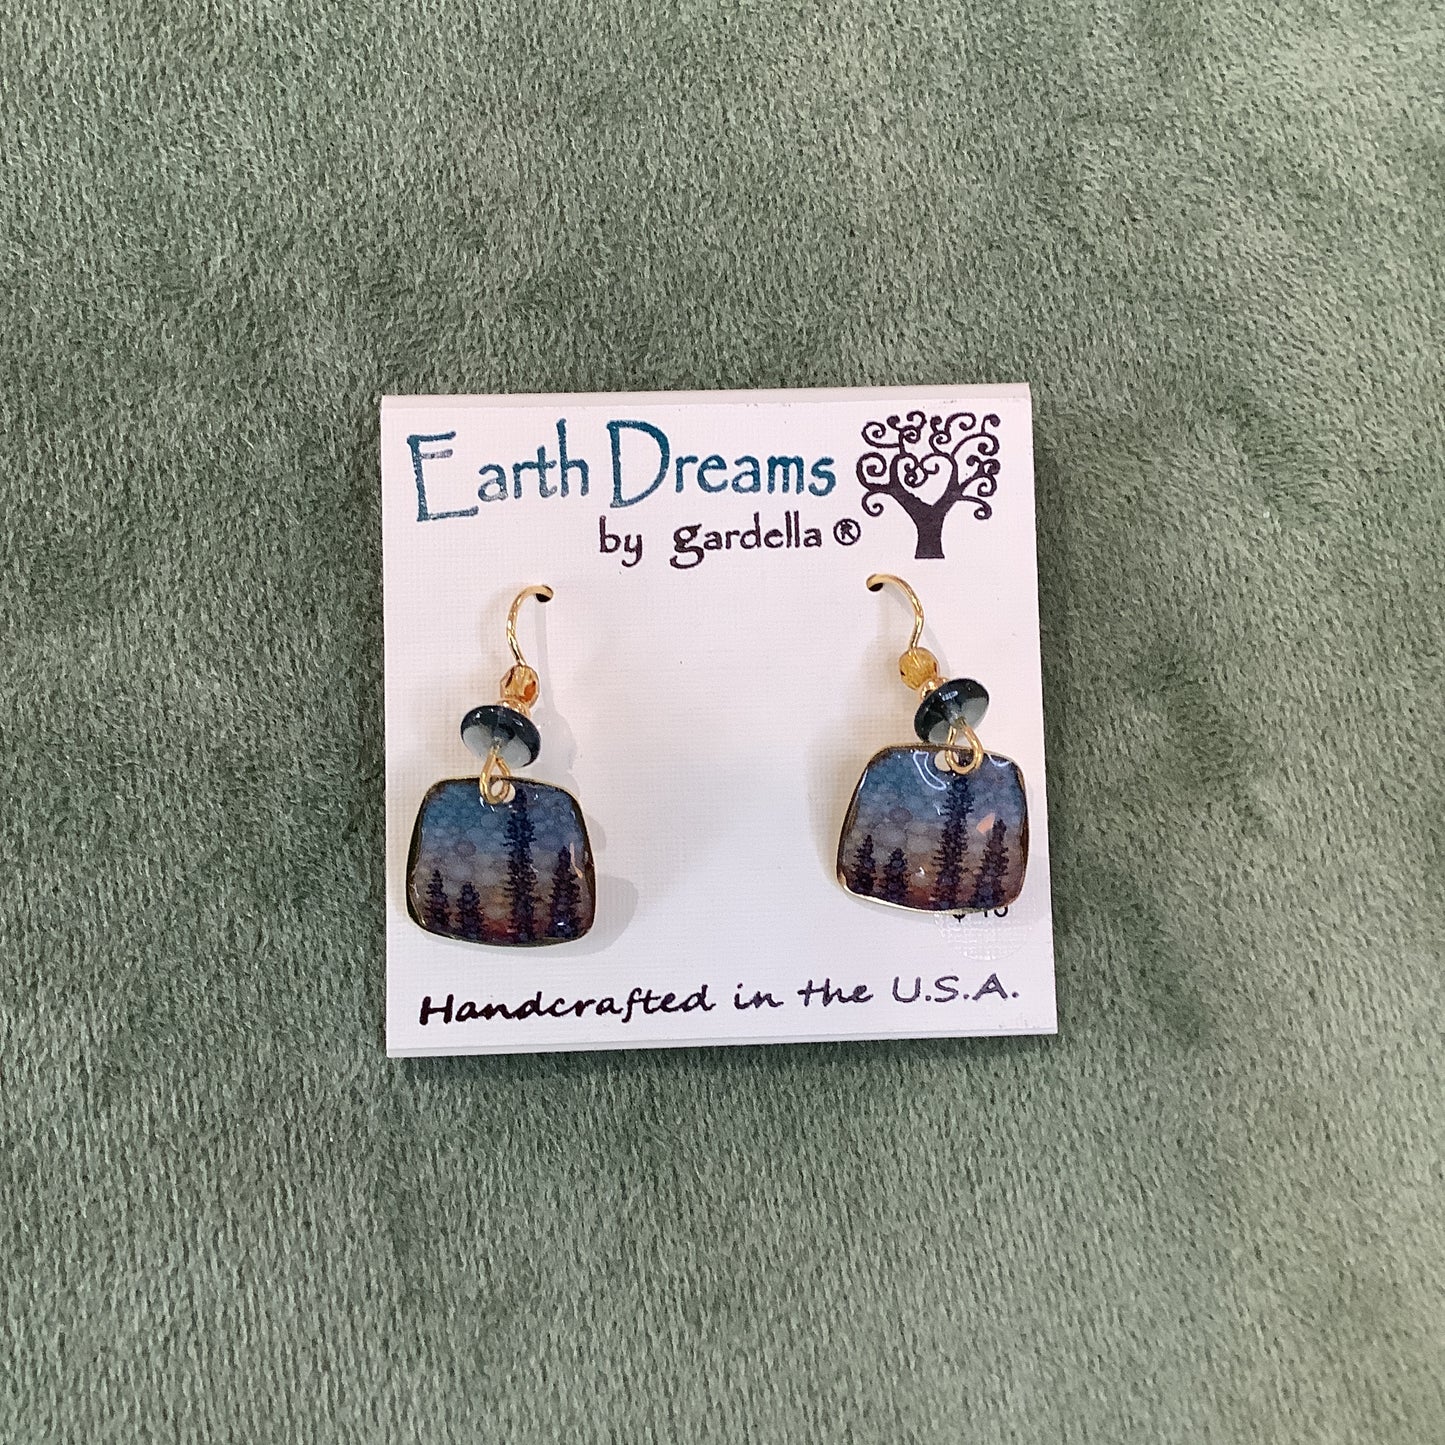 Northern Lights Earrings by Earth Dreams Jewelry